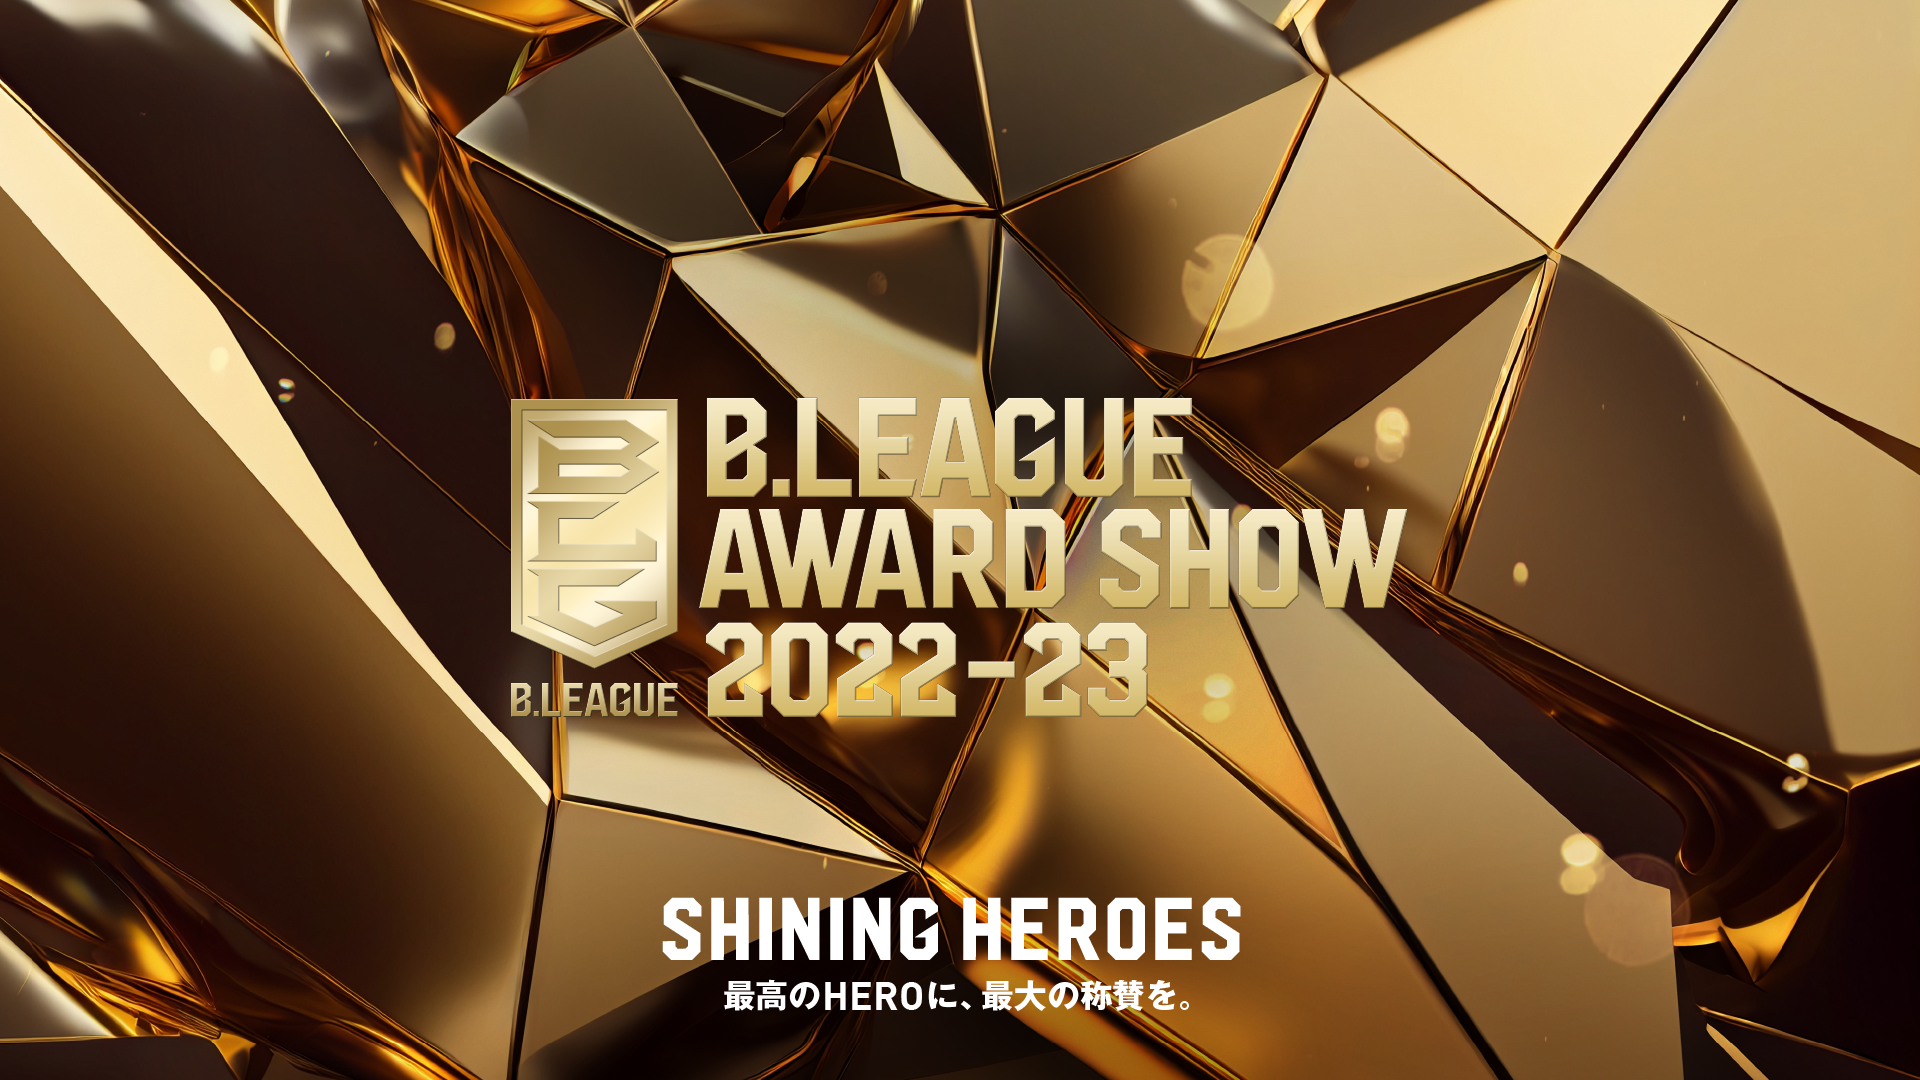 「B.LEAGUE AWARD SHOW 2022-23」  琉球ゴールデンキングス欠席のお知らせ